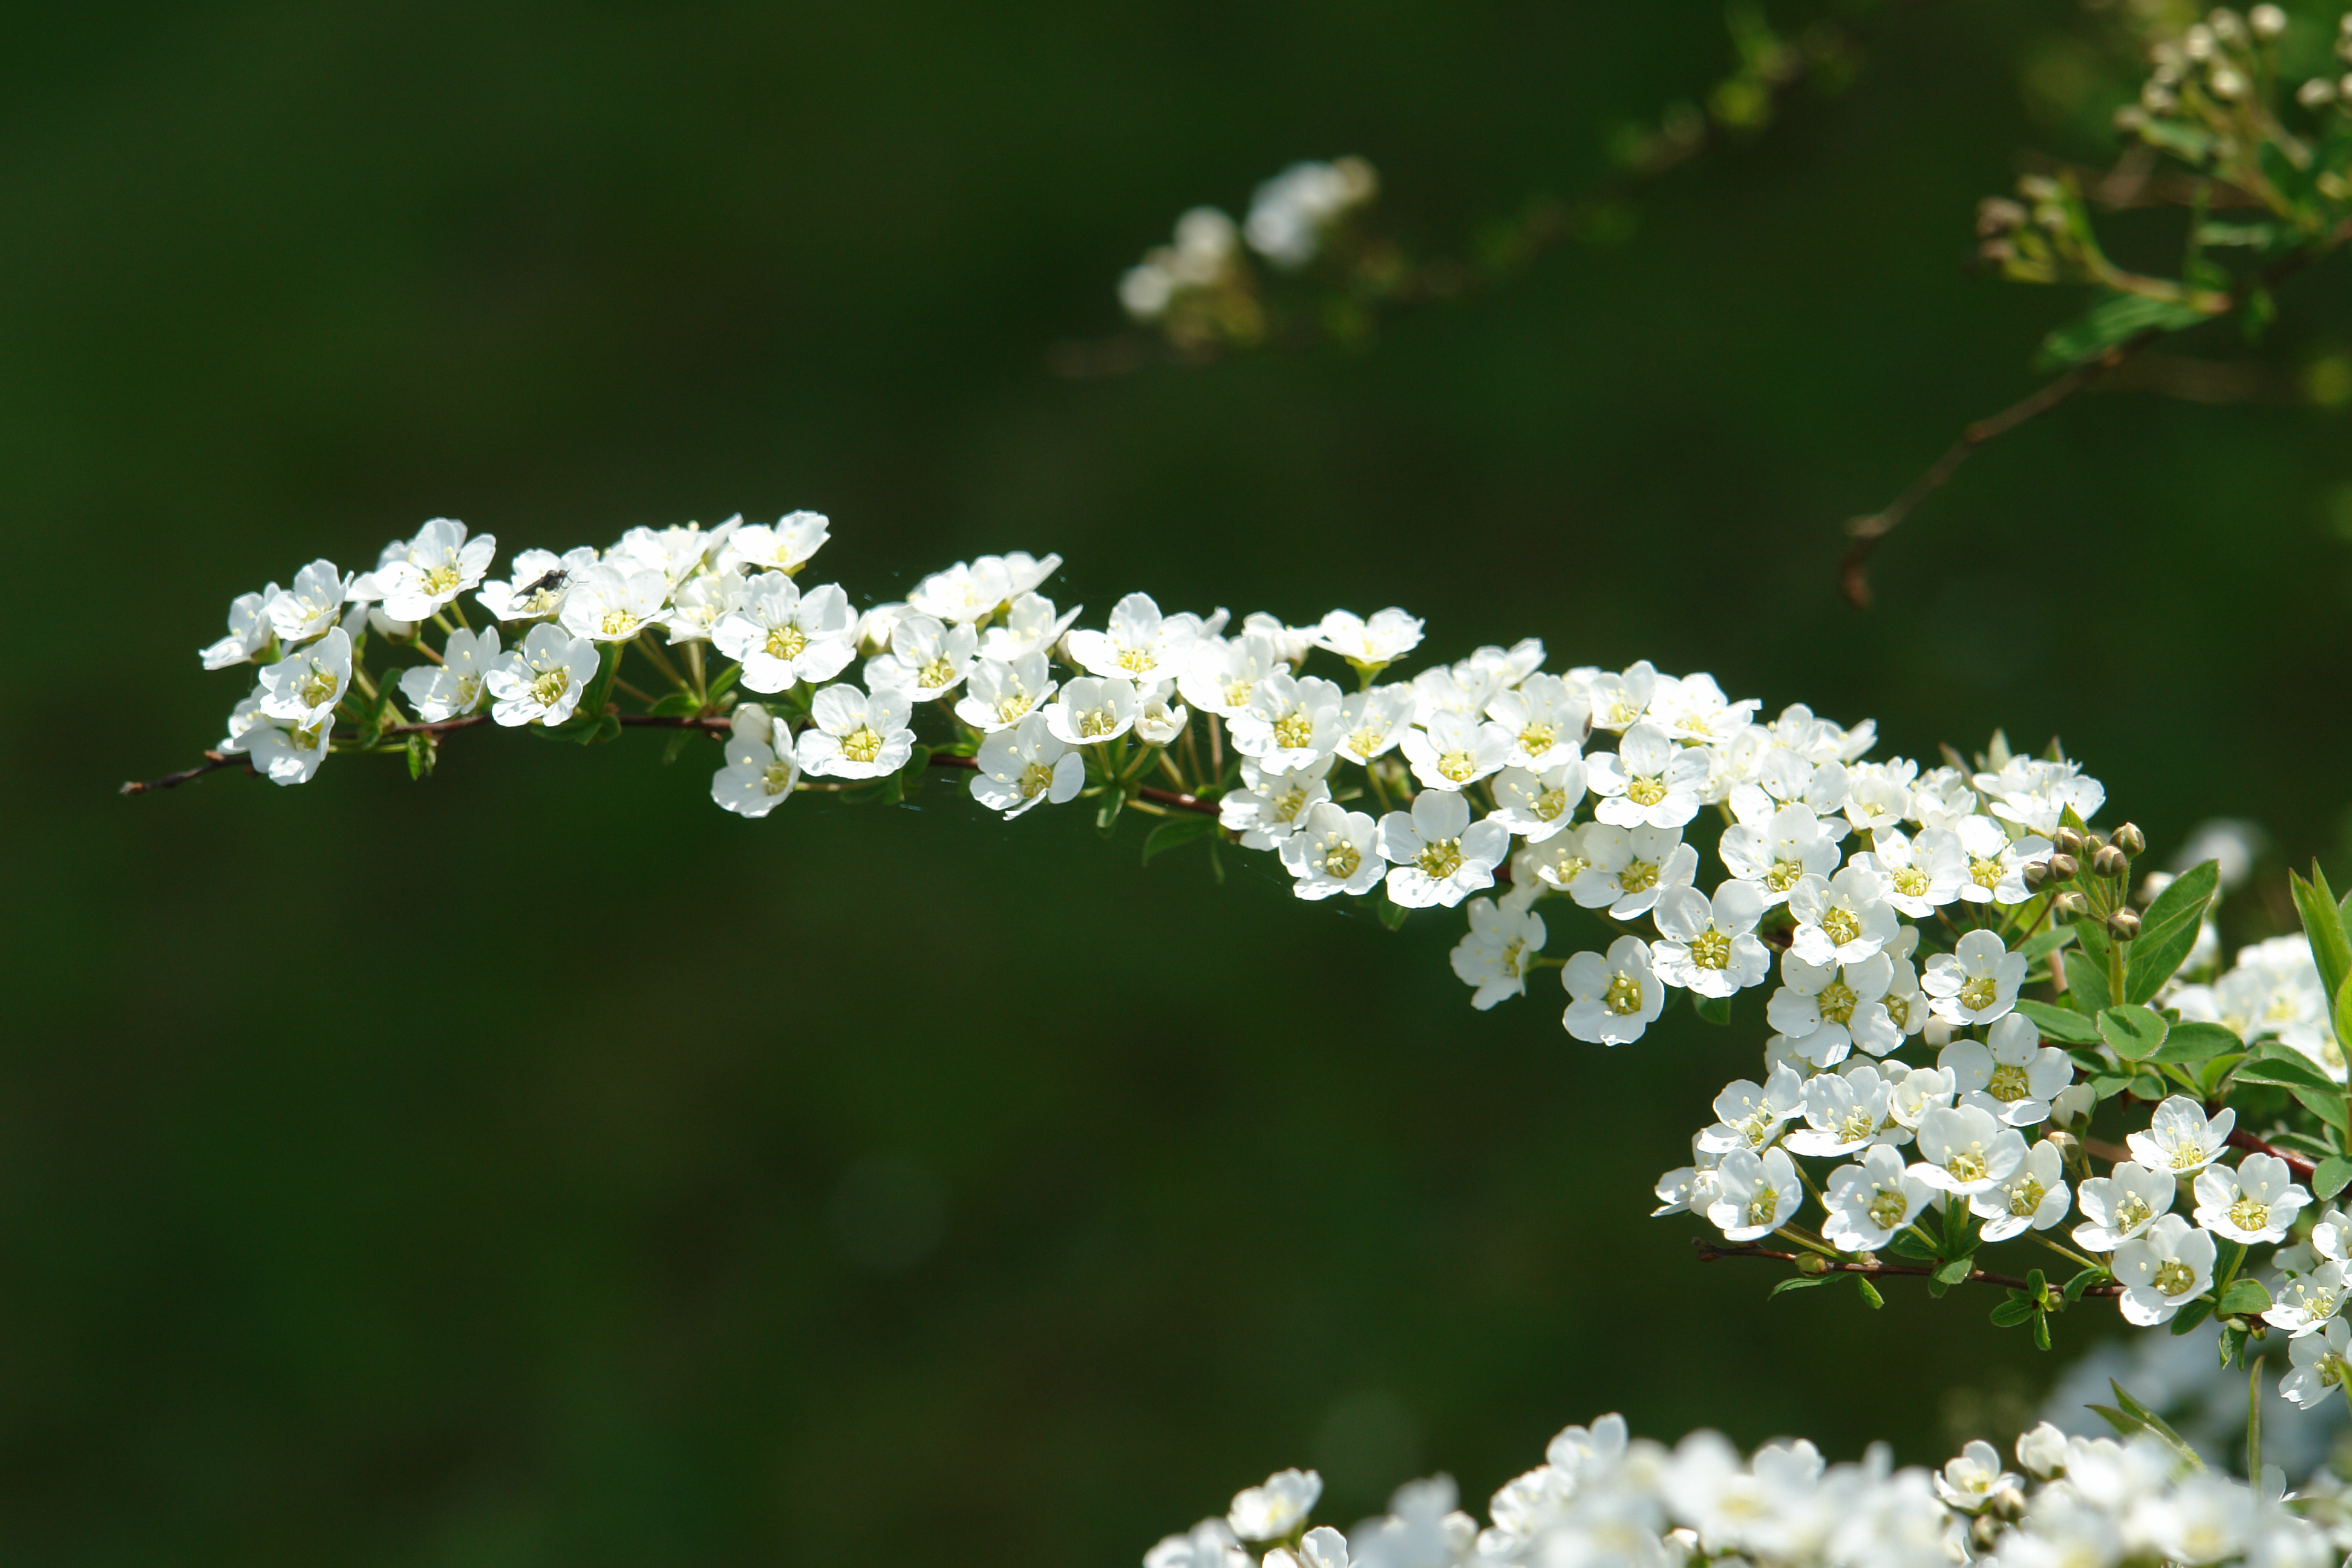 Spiraea x cinerea 'Grefsheim' - flowers